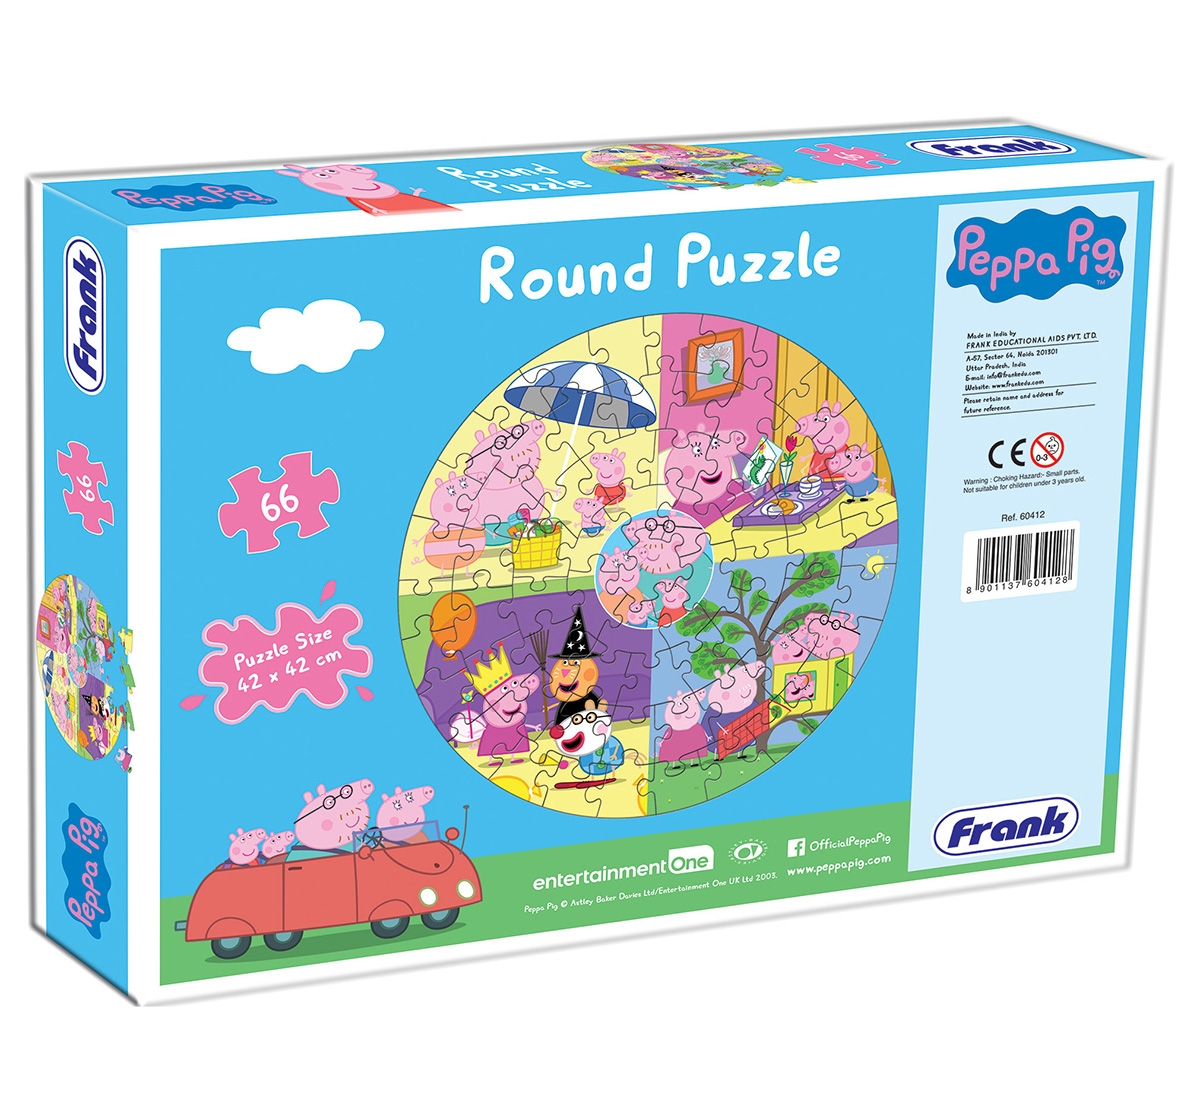 Peppa Pig | Peppa Pig Round Puzzle 66 pcs, 5Y+ 3